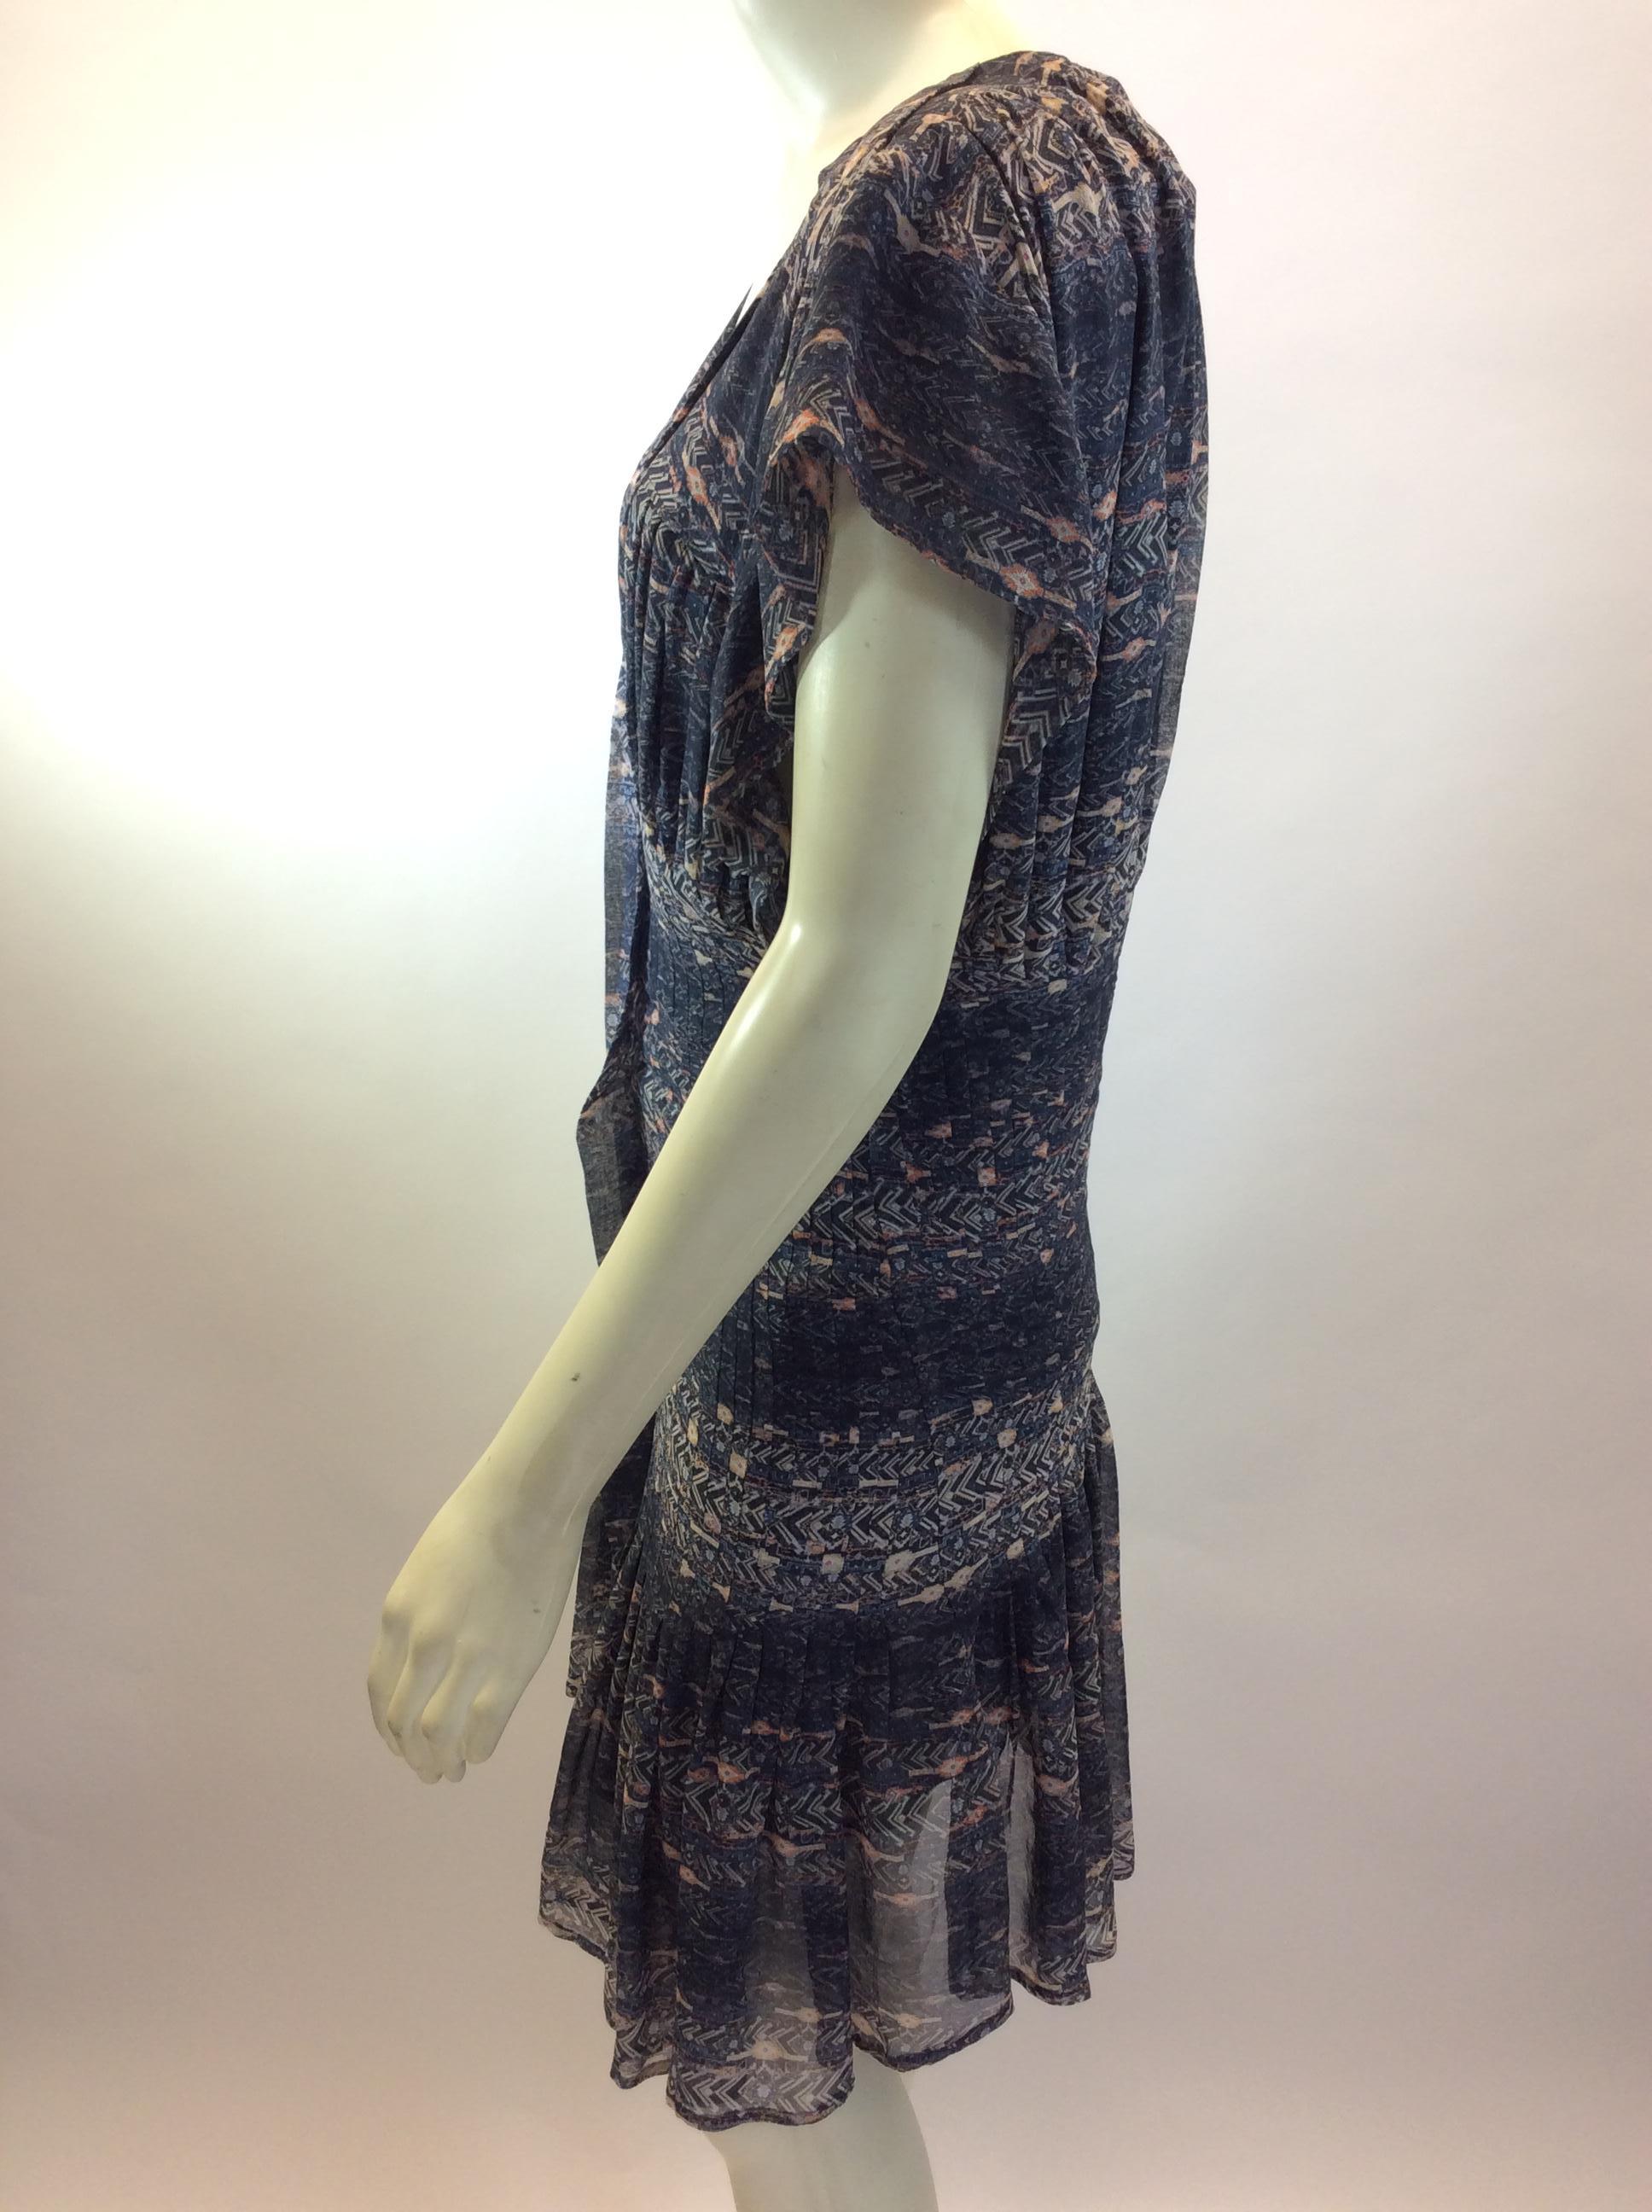 Isabel Marant Blue Print Silk Dress
$225
Made in Romania
100% Silk
Size 36
Length 35”
Bust 30”
Waist 29